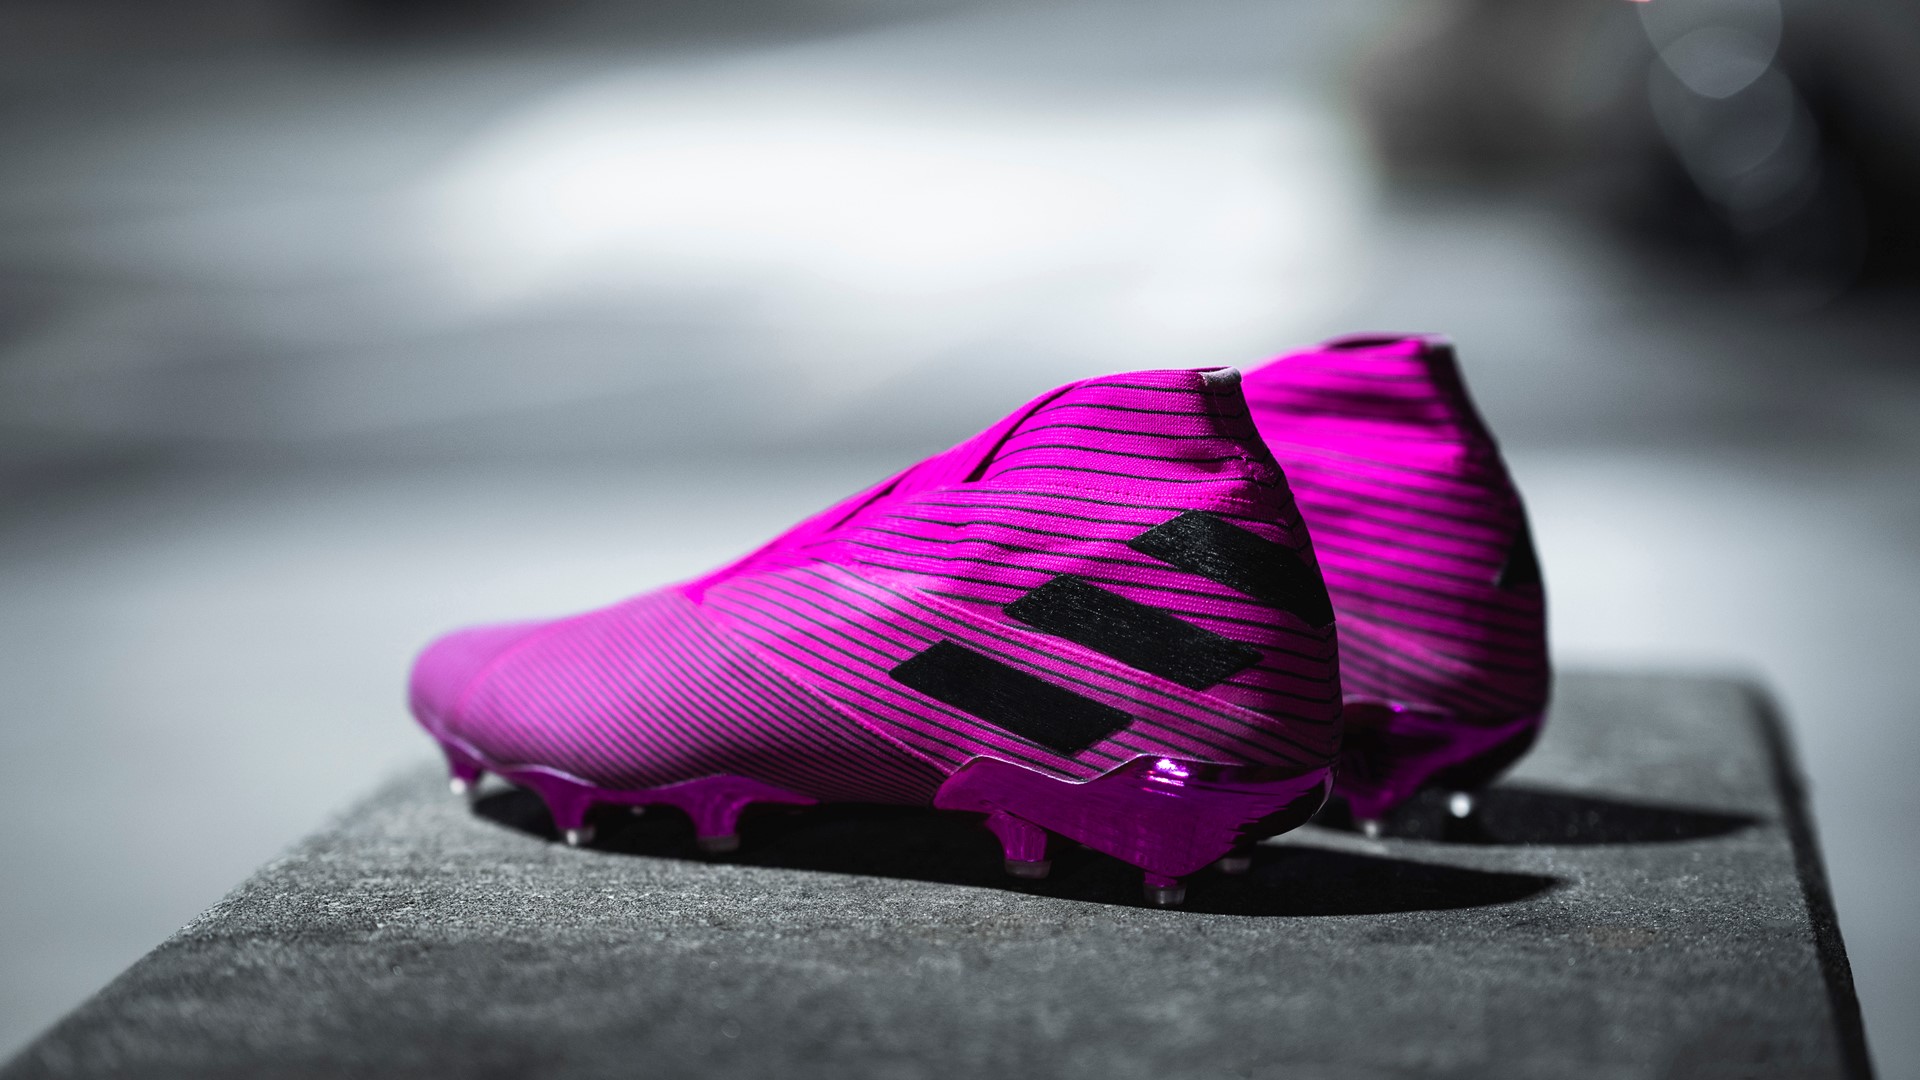 New Release Predator Mutator 20+ Society Football Shoes. Pinning